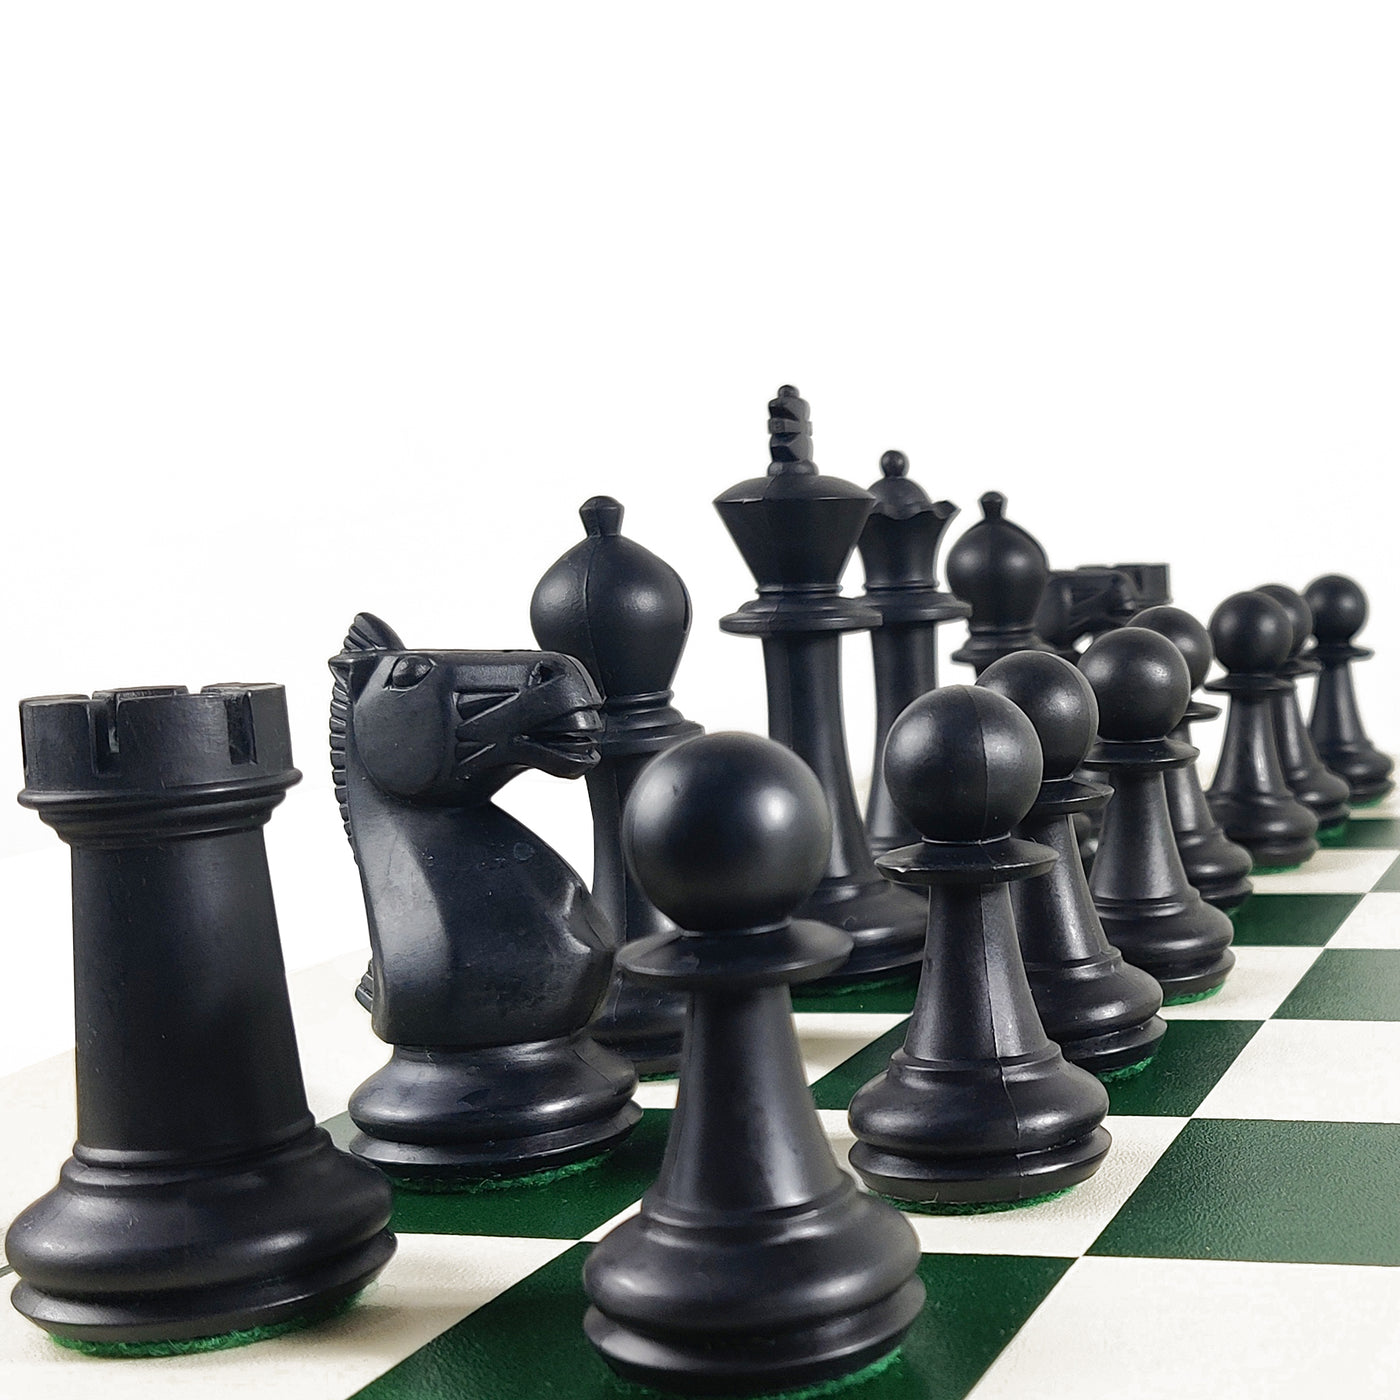 Gambol Professional Chess Set (1.2KG)